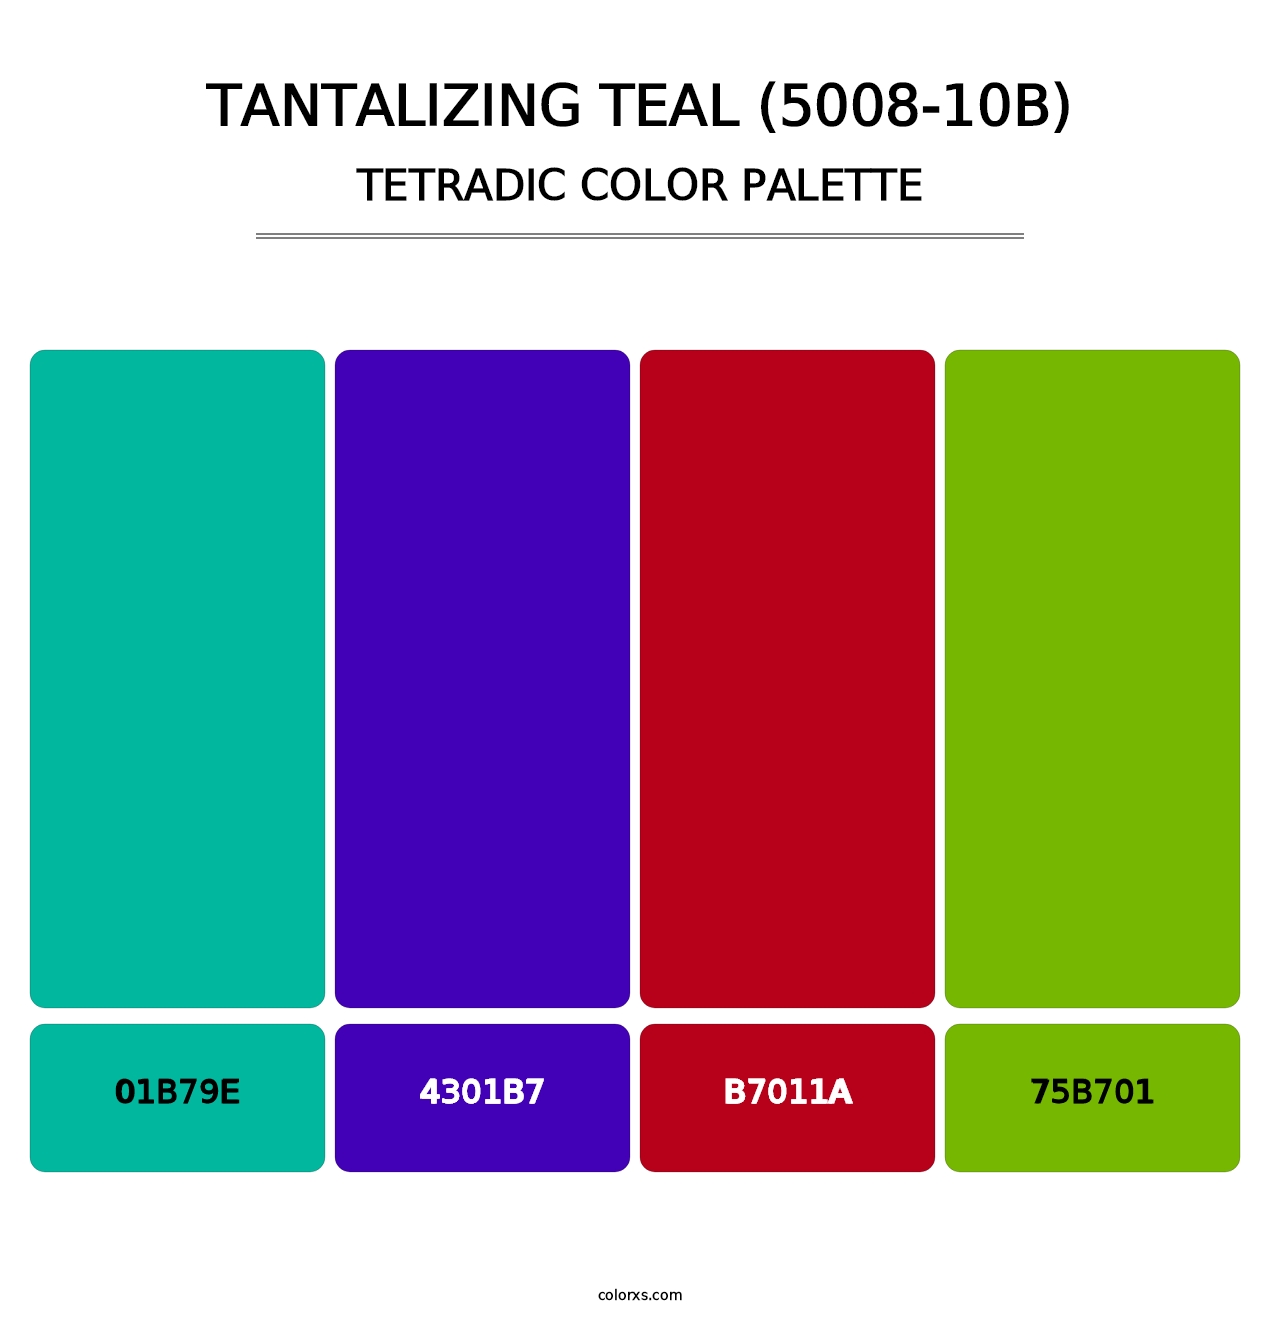 Tantalizing Teal (5008-10B) - Tetradic Color Palette